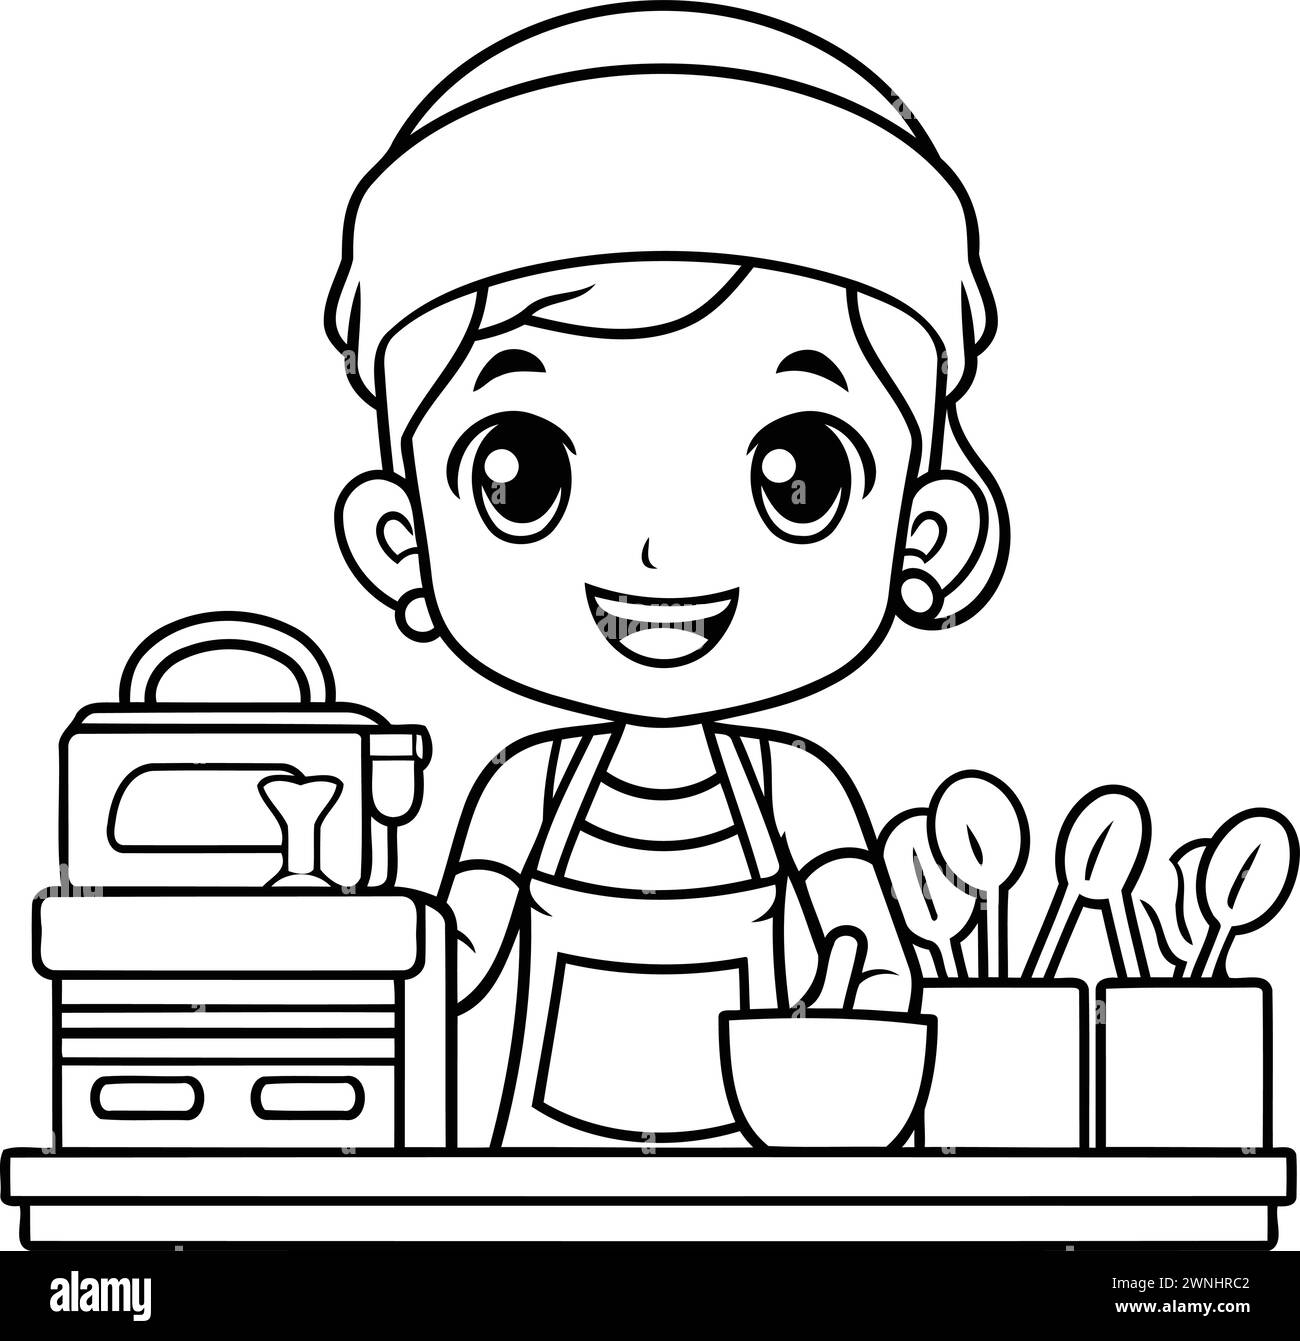 cute little chef with utensils cartoon vector illustration graphic design Stock Vector